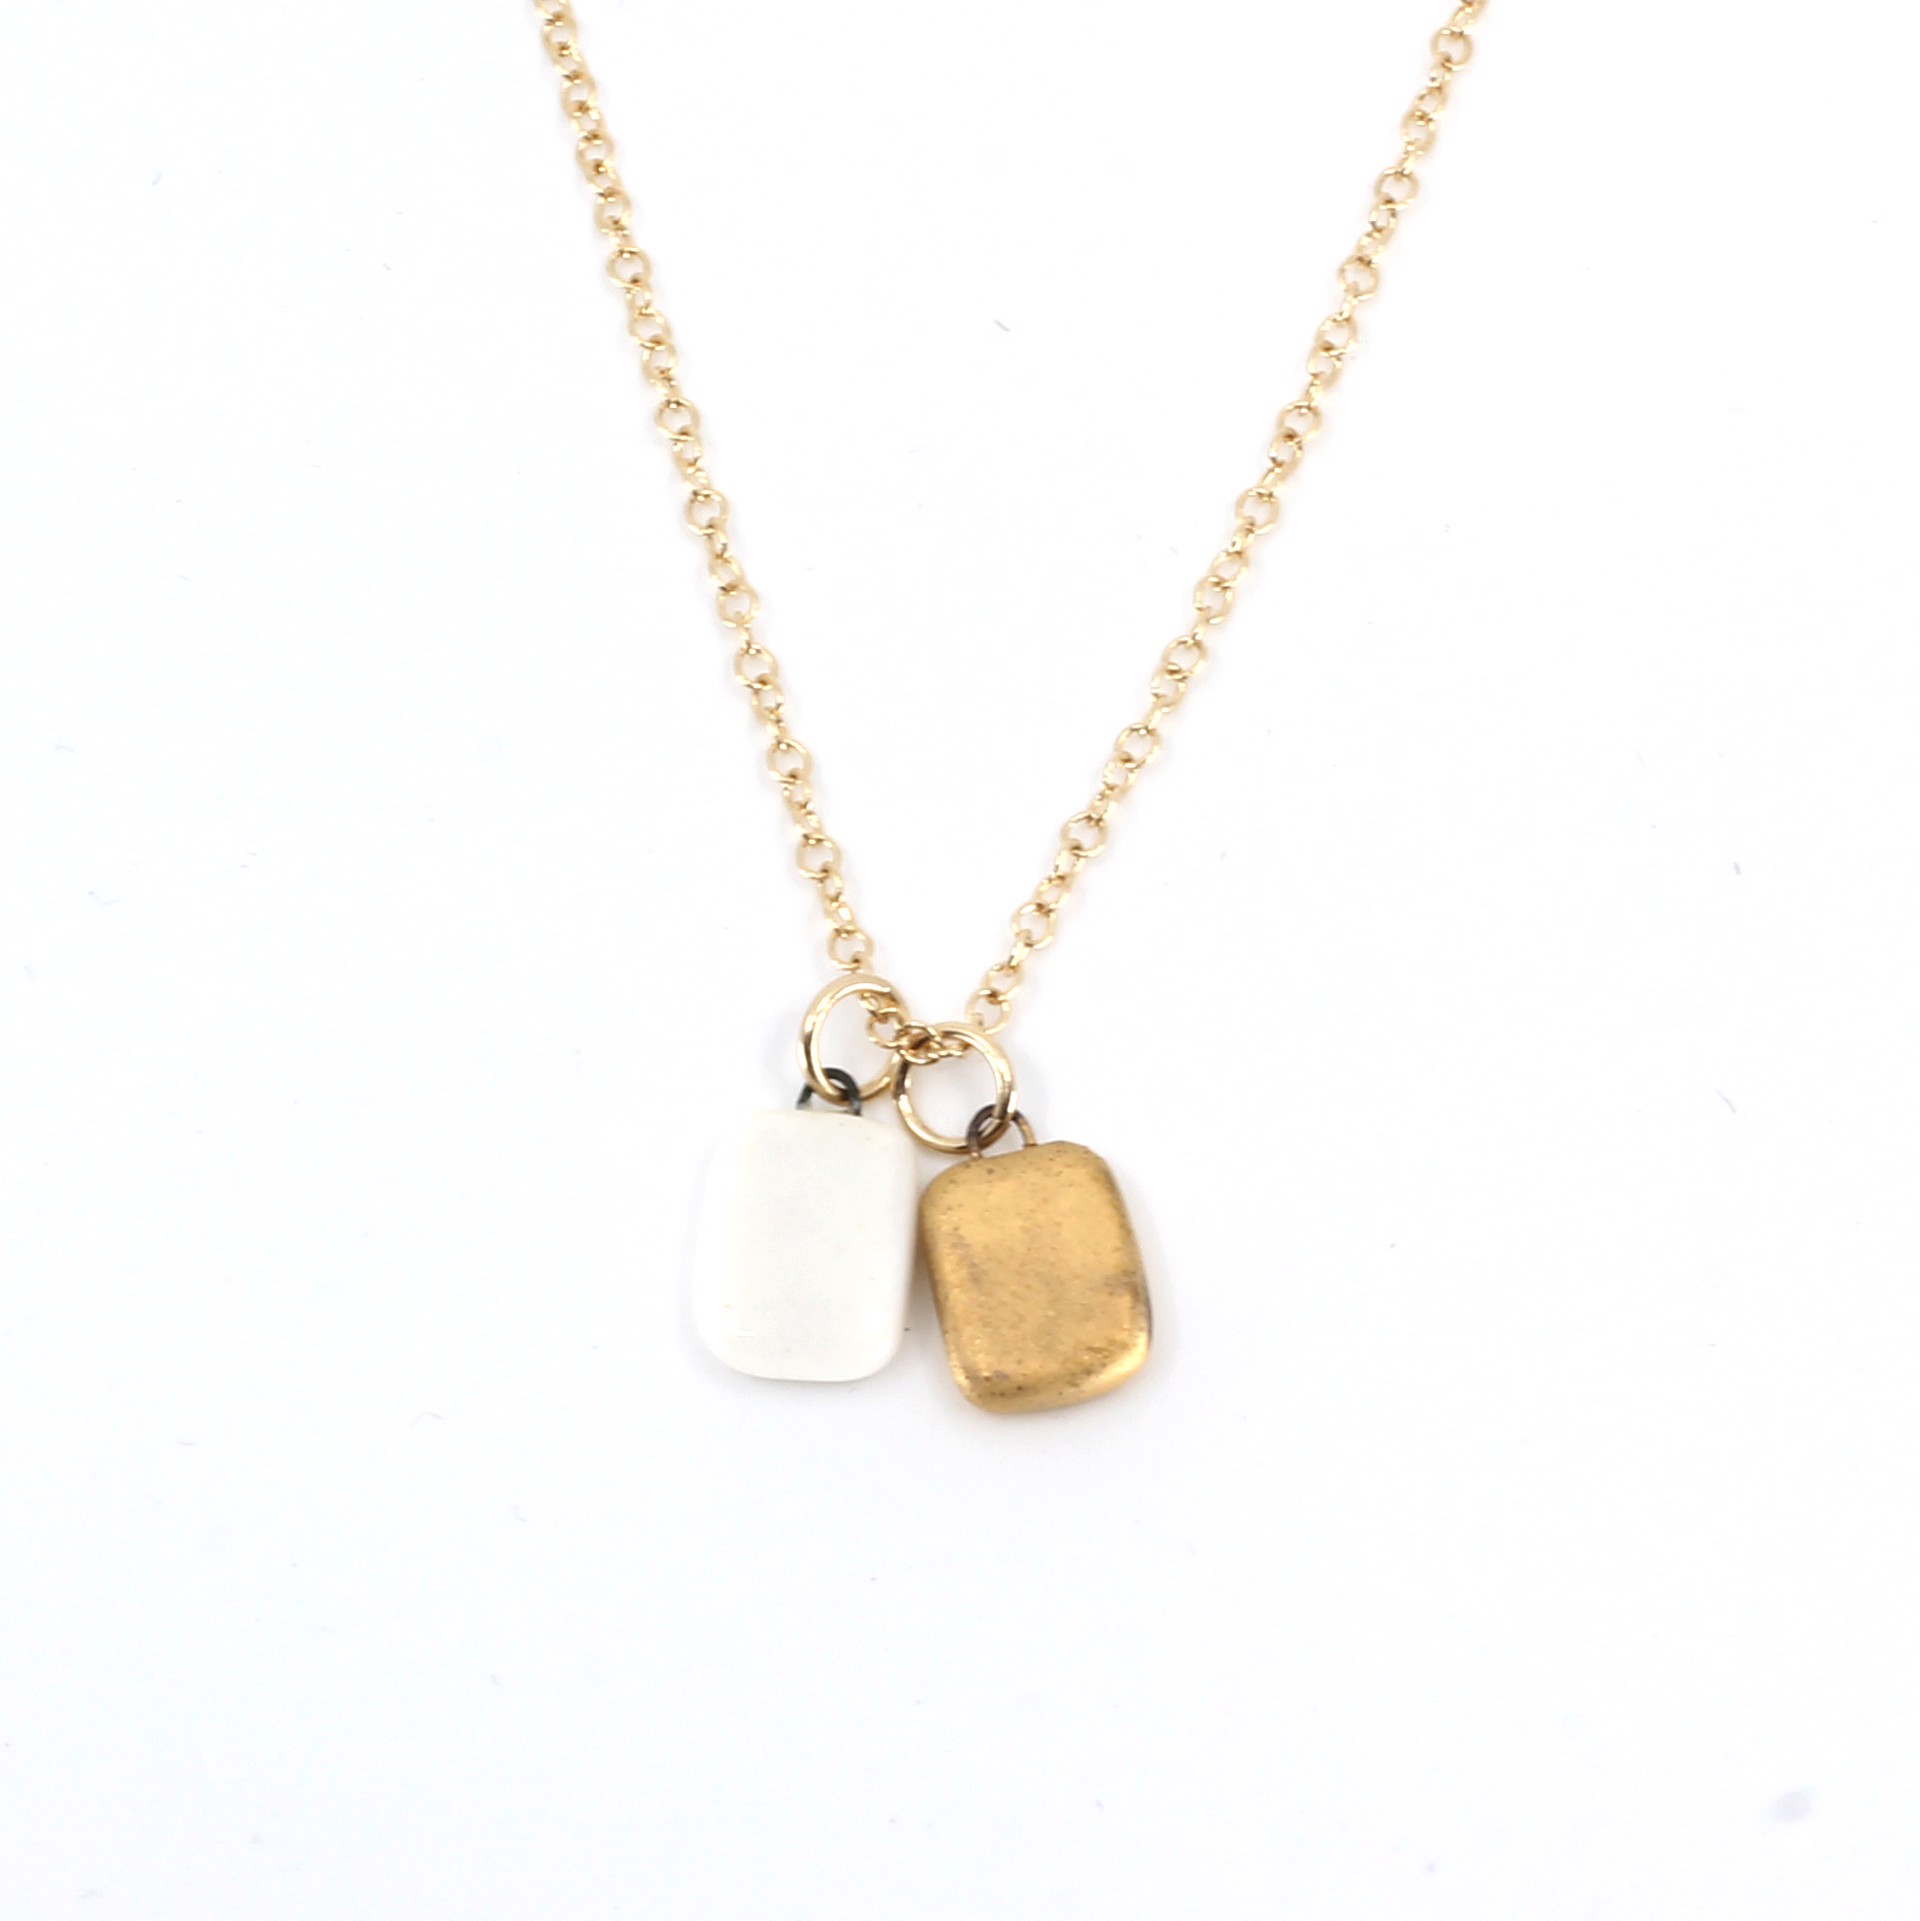 White + Gold Necklace by Jessica Wertz